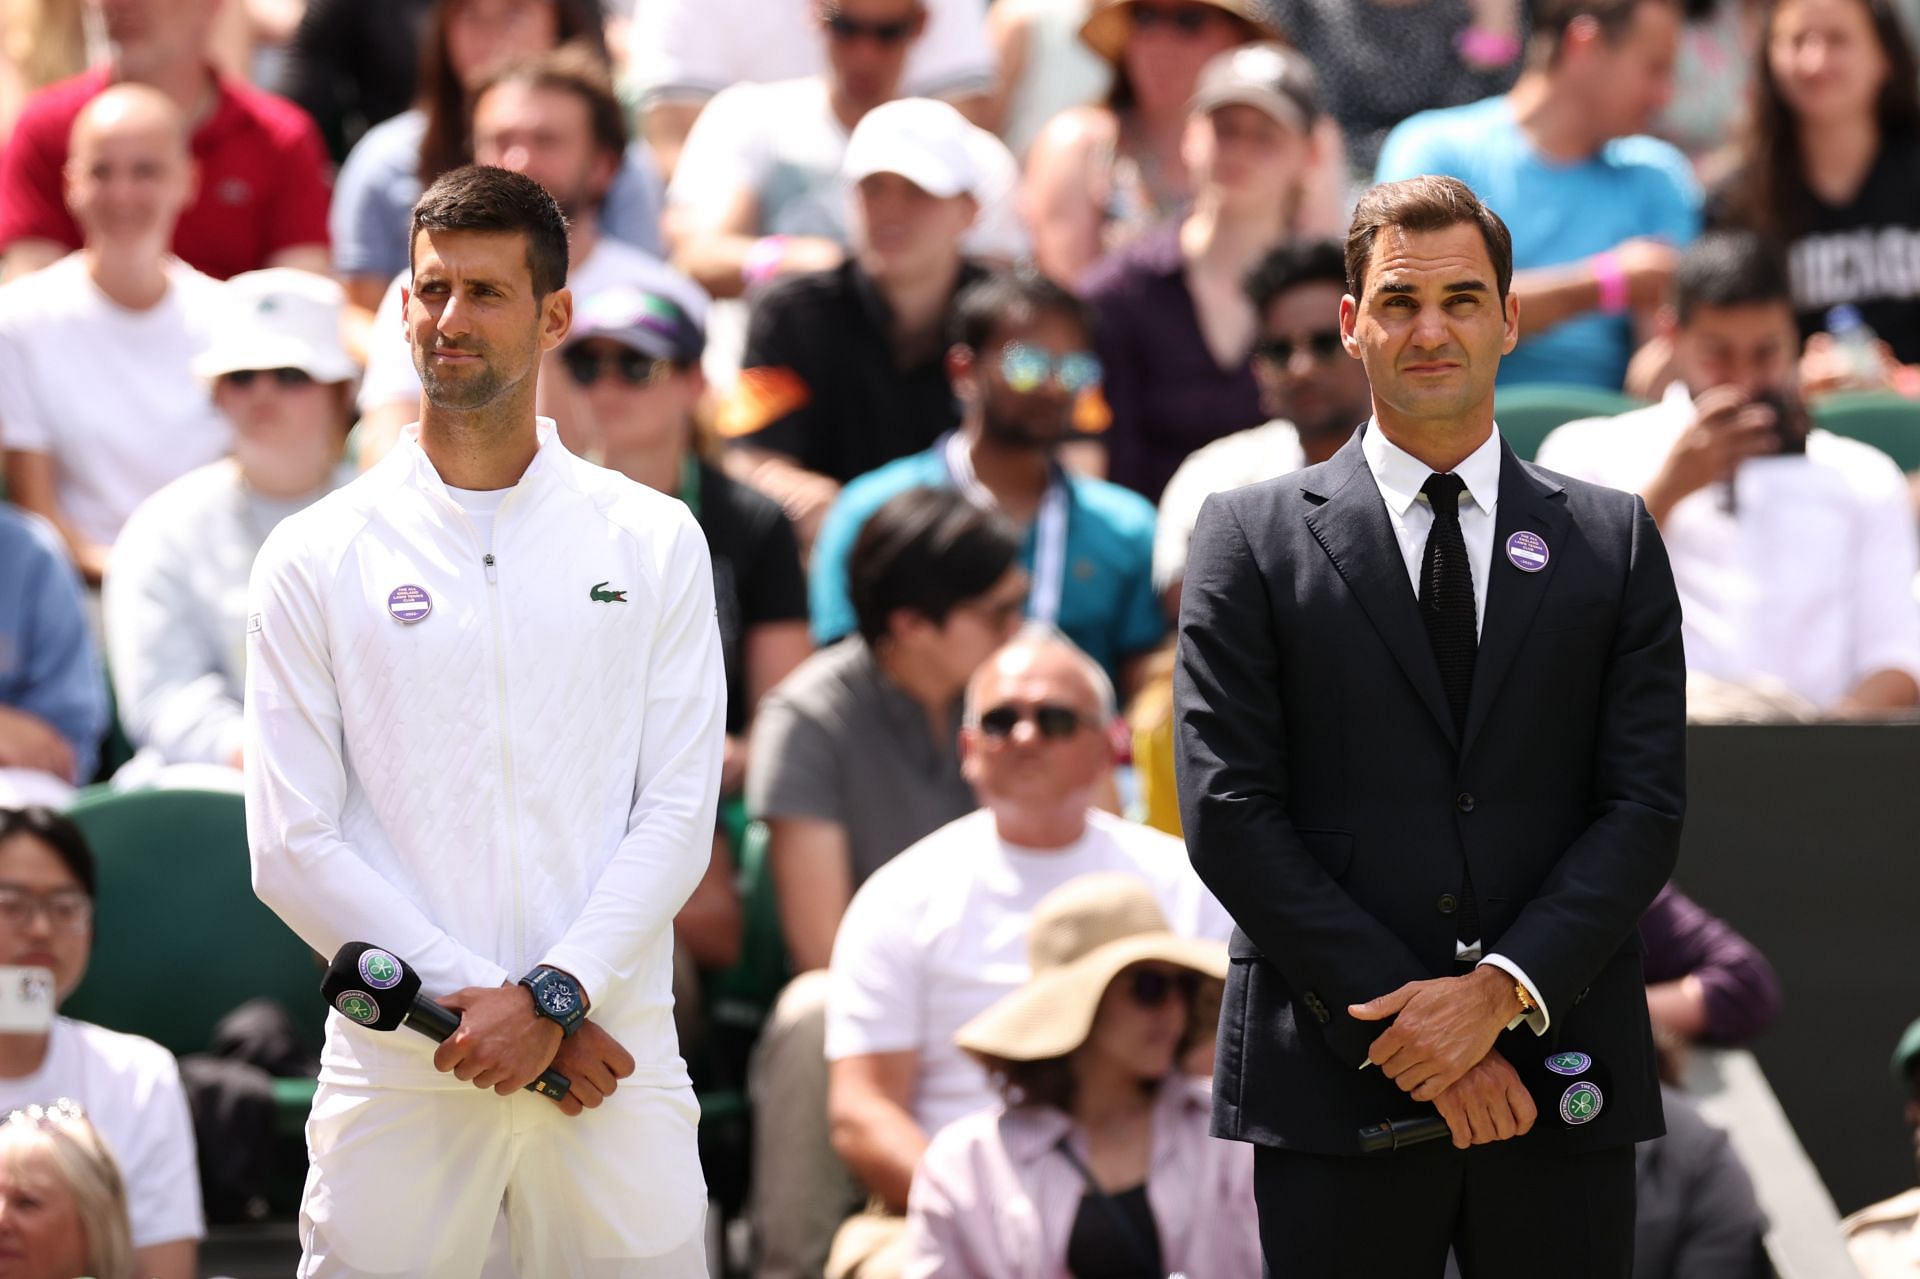 Novak Djokovic paid tribute to Roger Federer